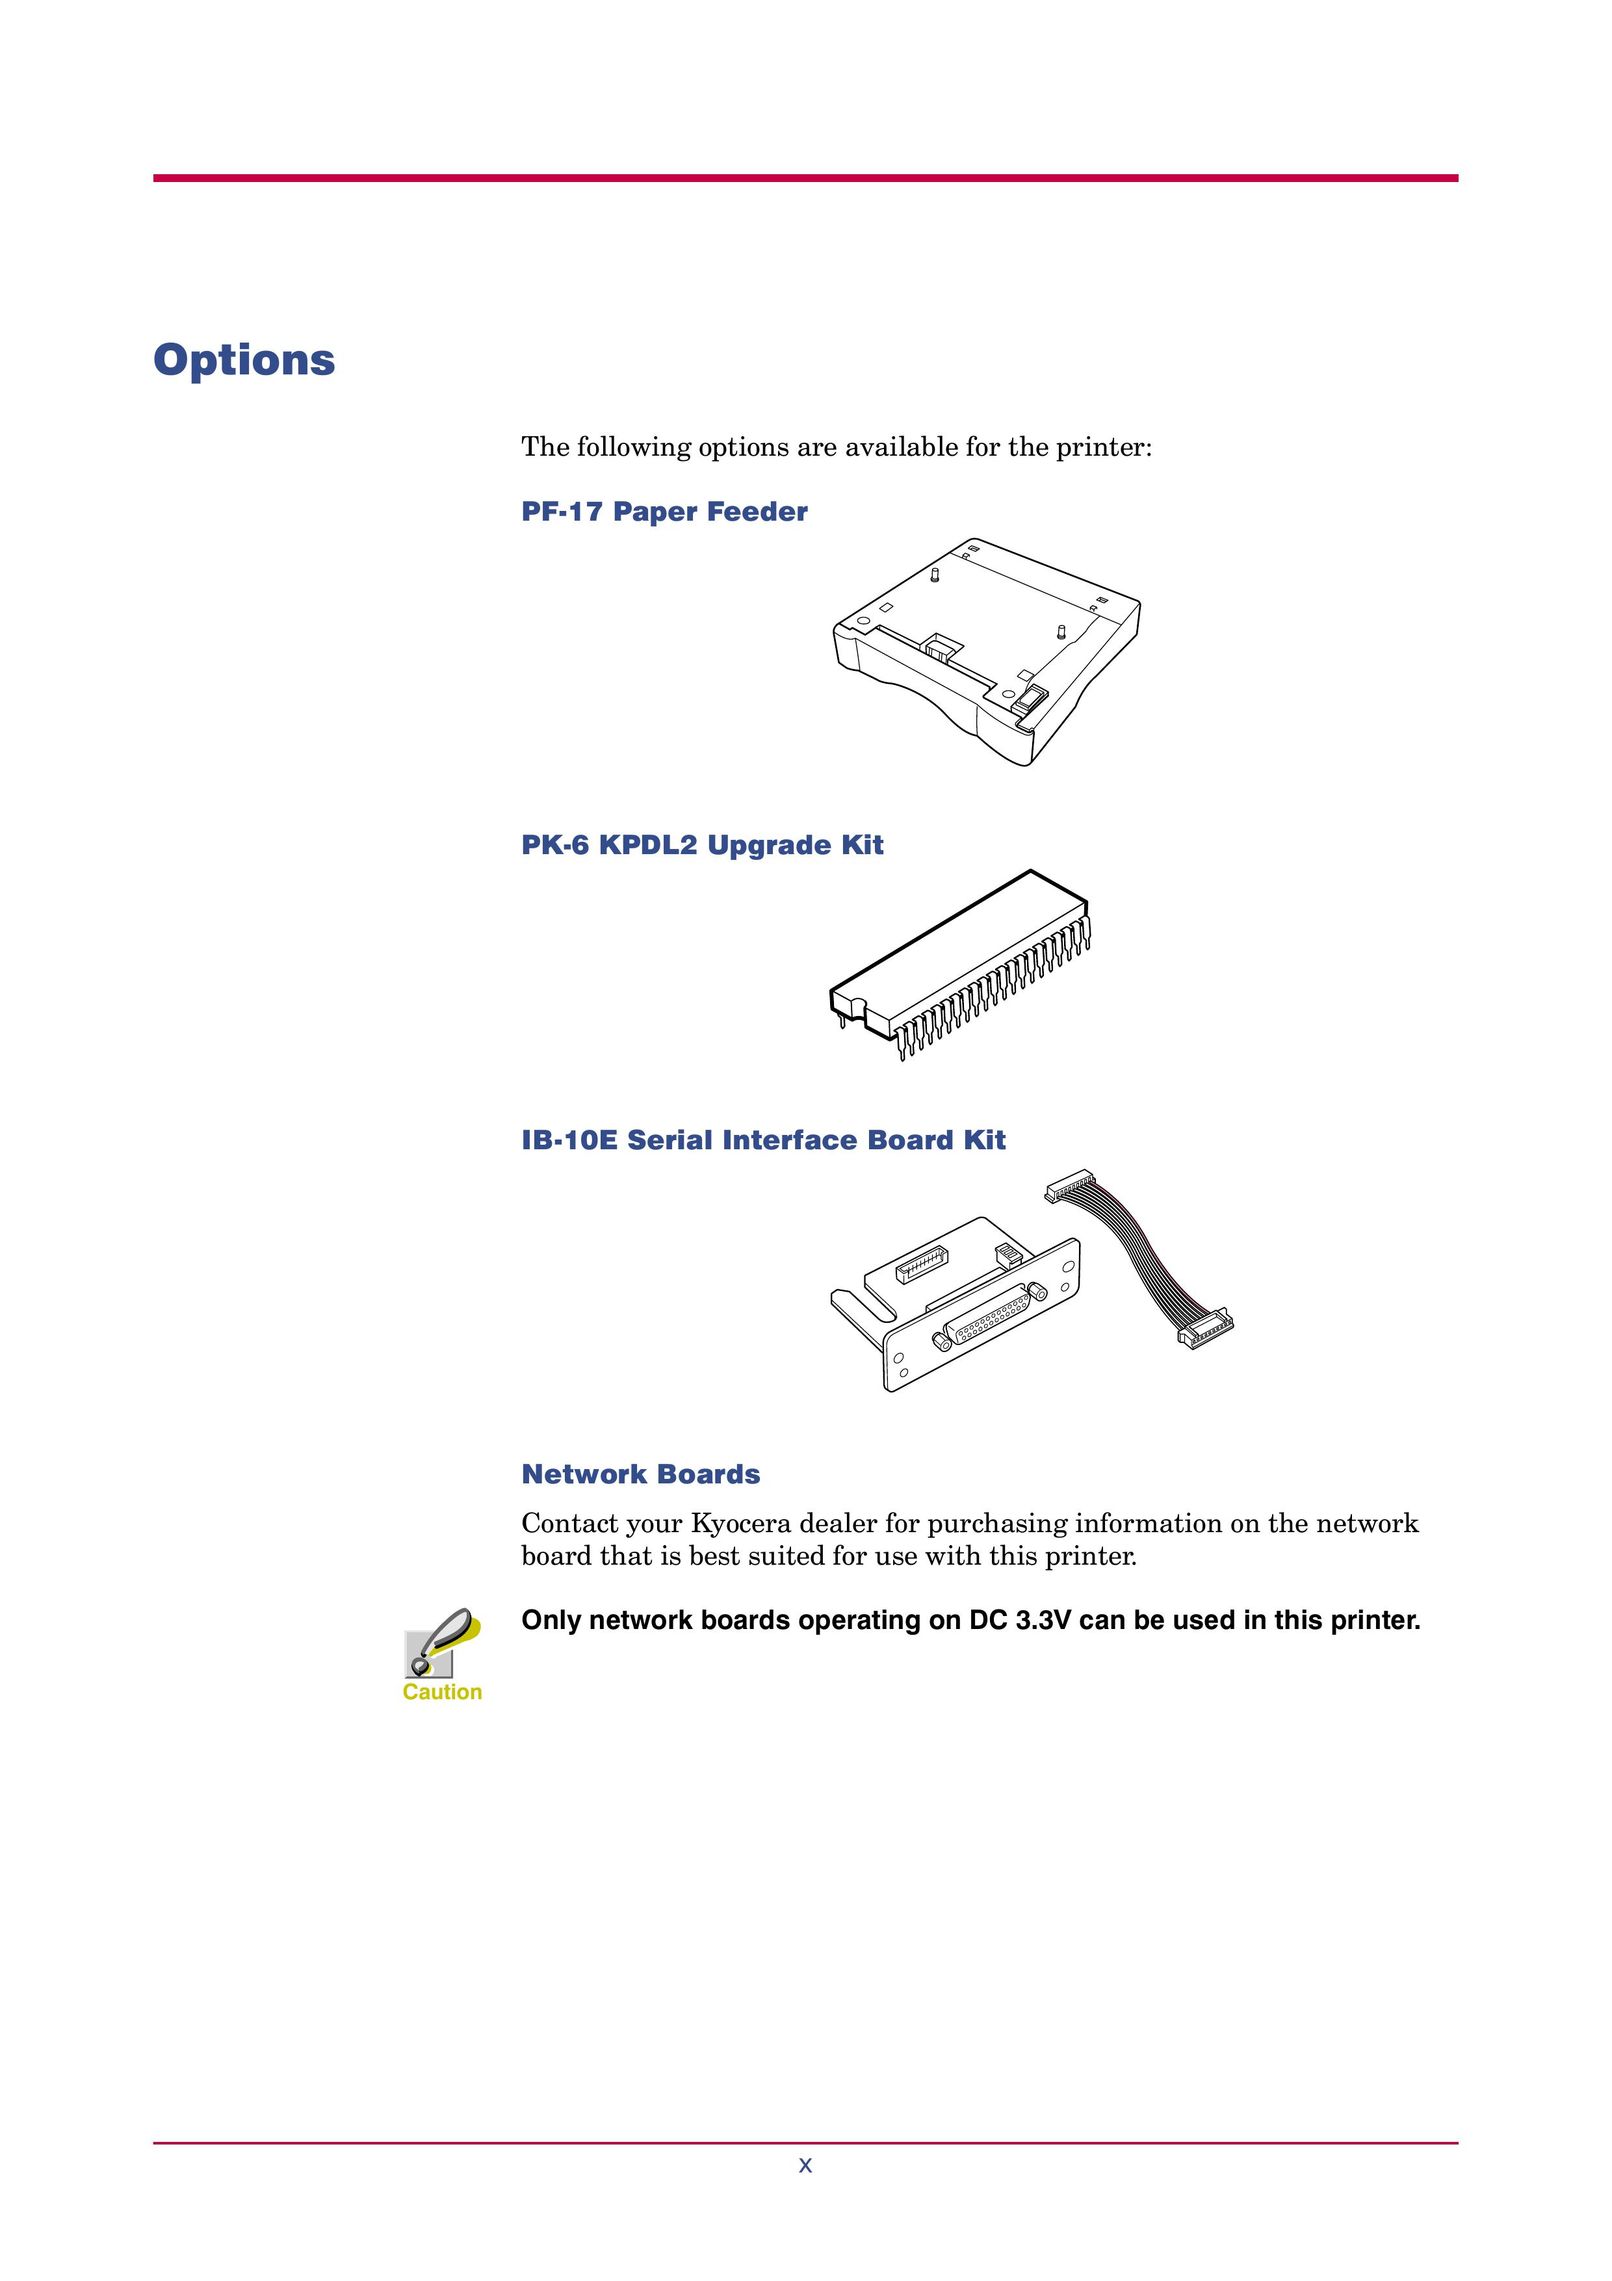 Kyocera FS-1000 Printer User Manual (Page 11)